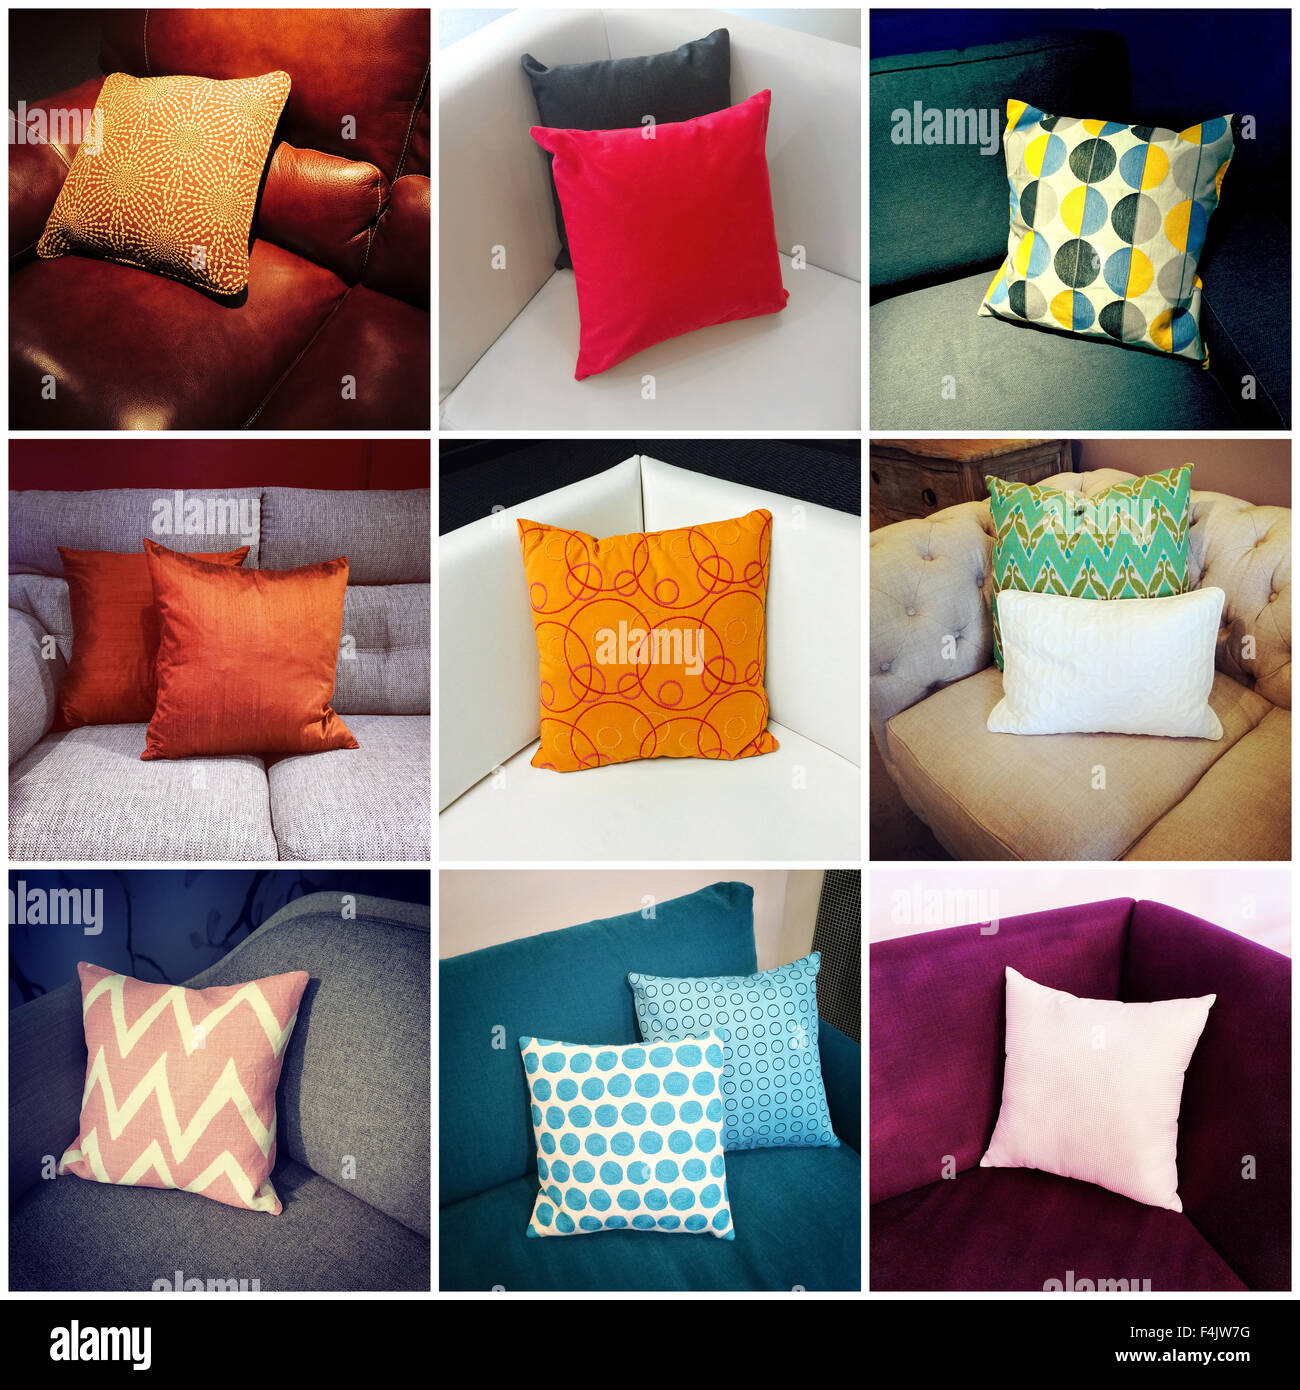 https://c8.alamy.com/comp/F4JW7G/colorful-cushions-decorating-sofas-interior-design-collage-of-nine-F4JW7G.jpg